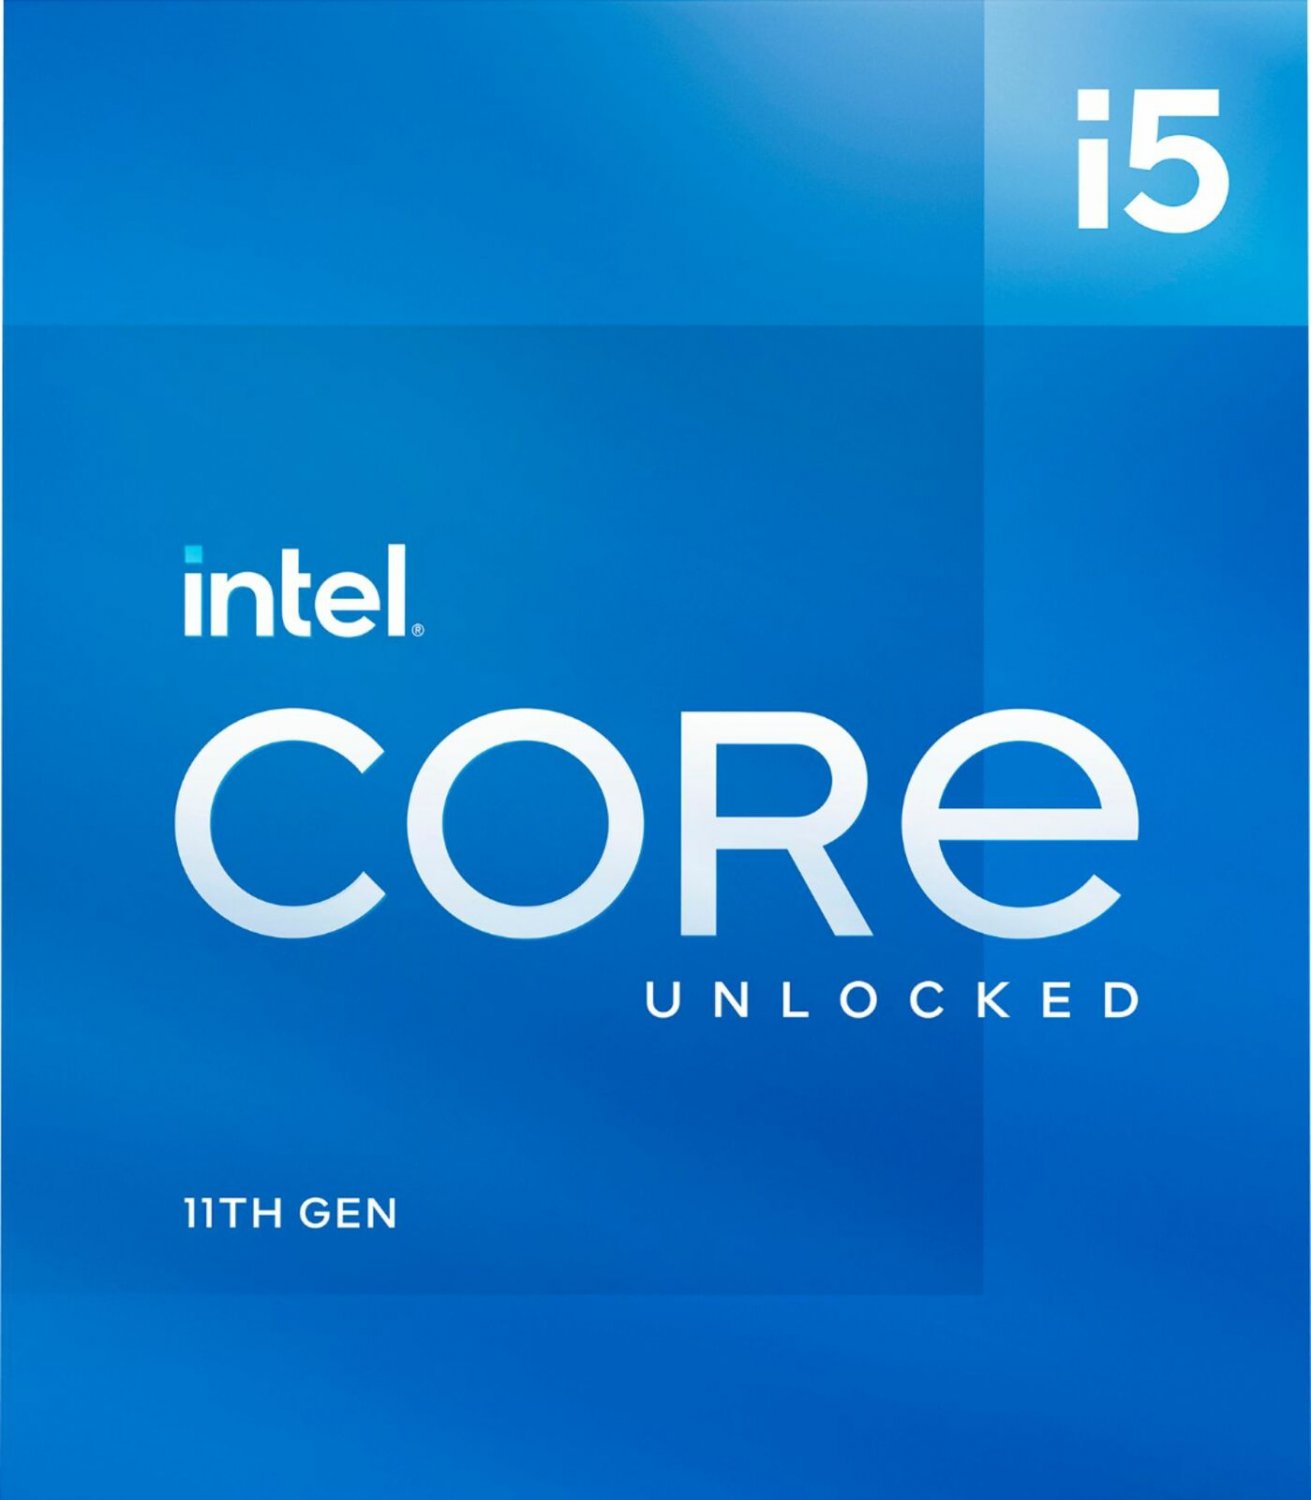 Intel Core i5-11600K 11th Generation Desktop Processor 6 Cores up to 4.9 GHz Unlocked LGA1200 125W